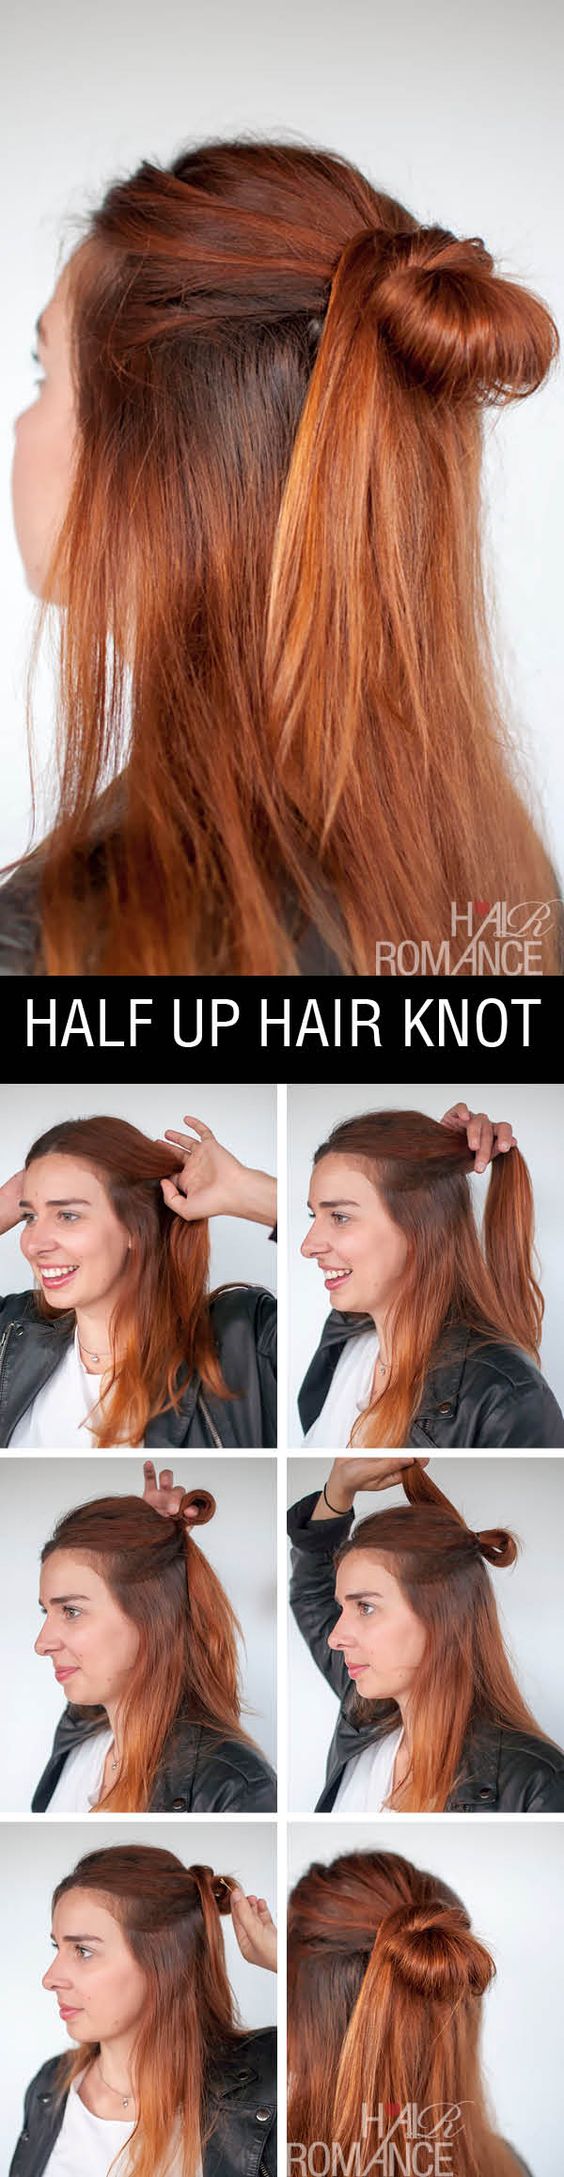 Half up Hair Knot for Bright Hair via